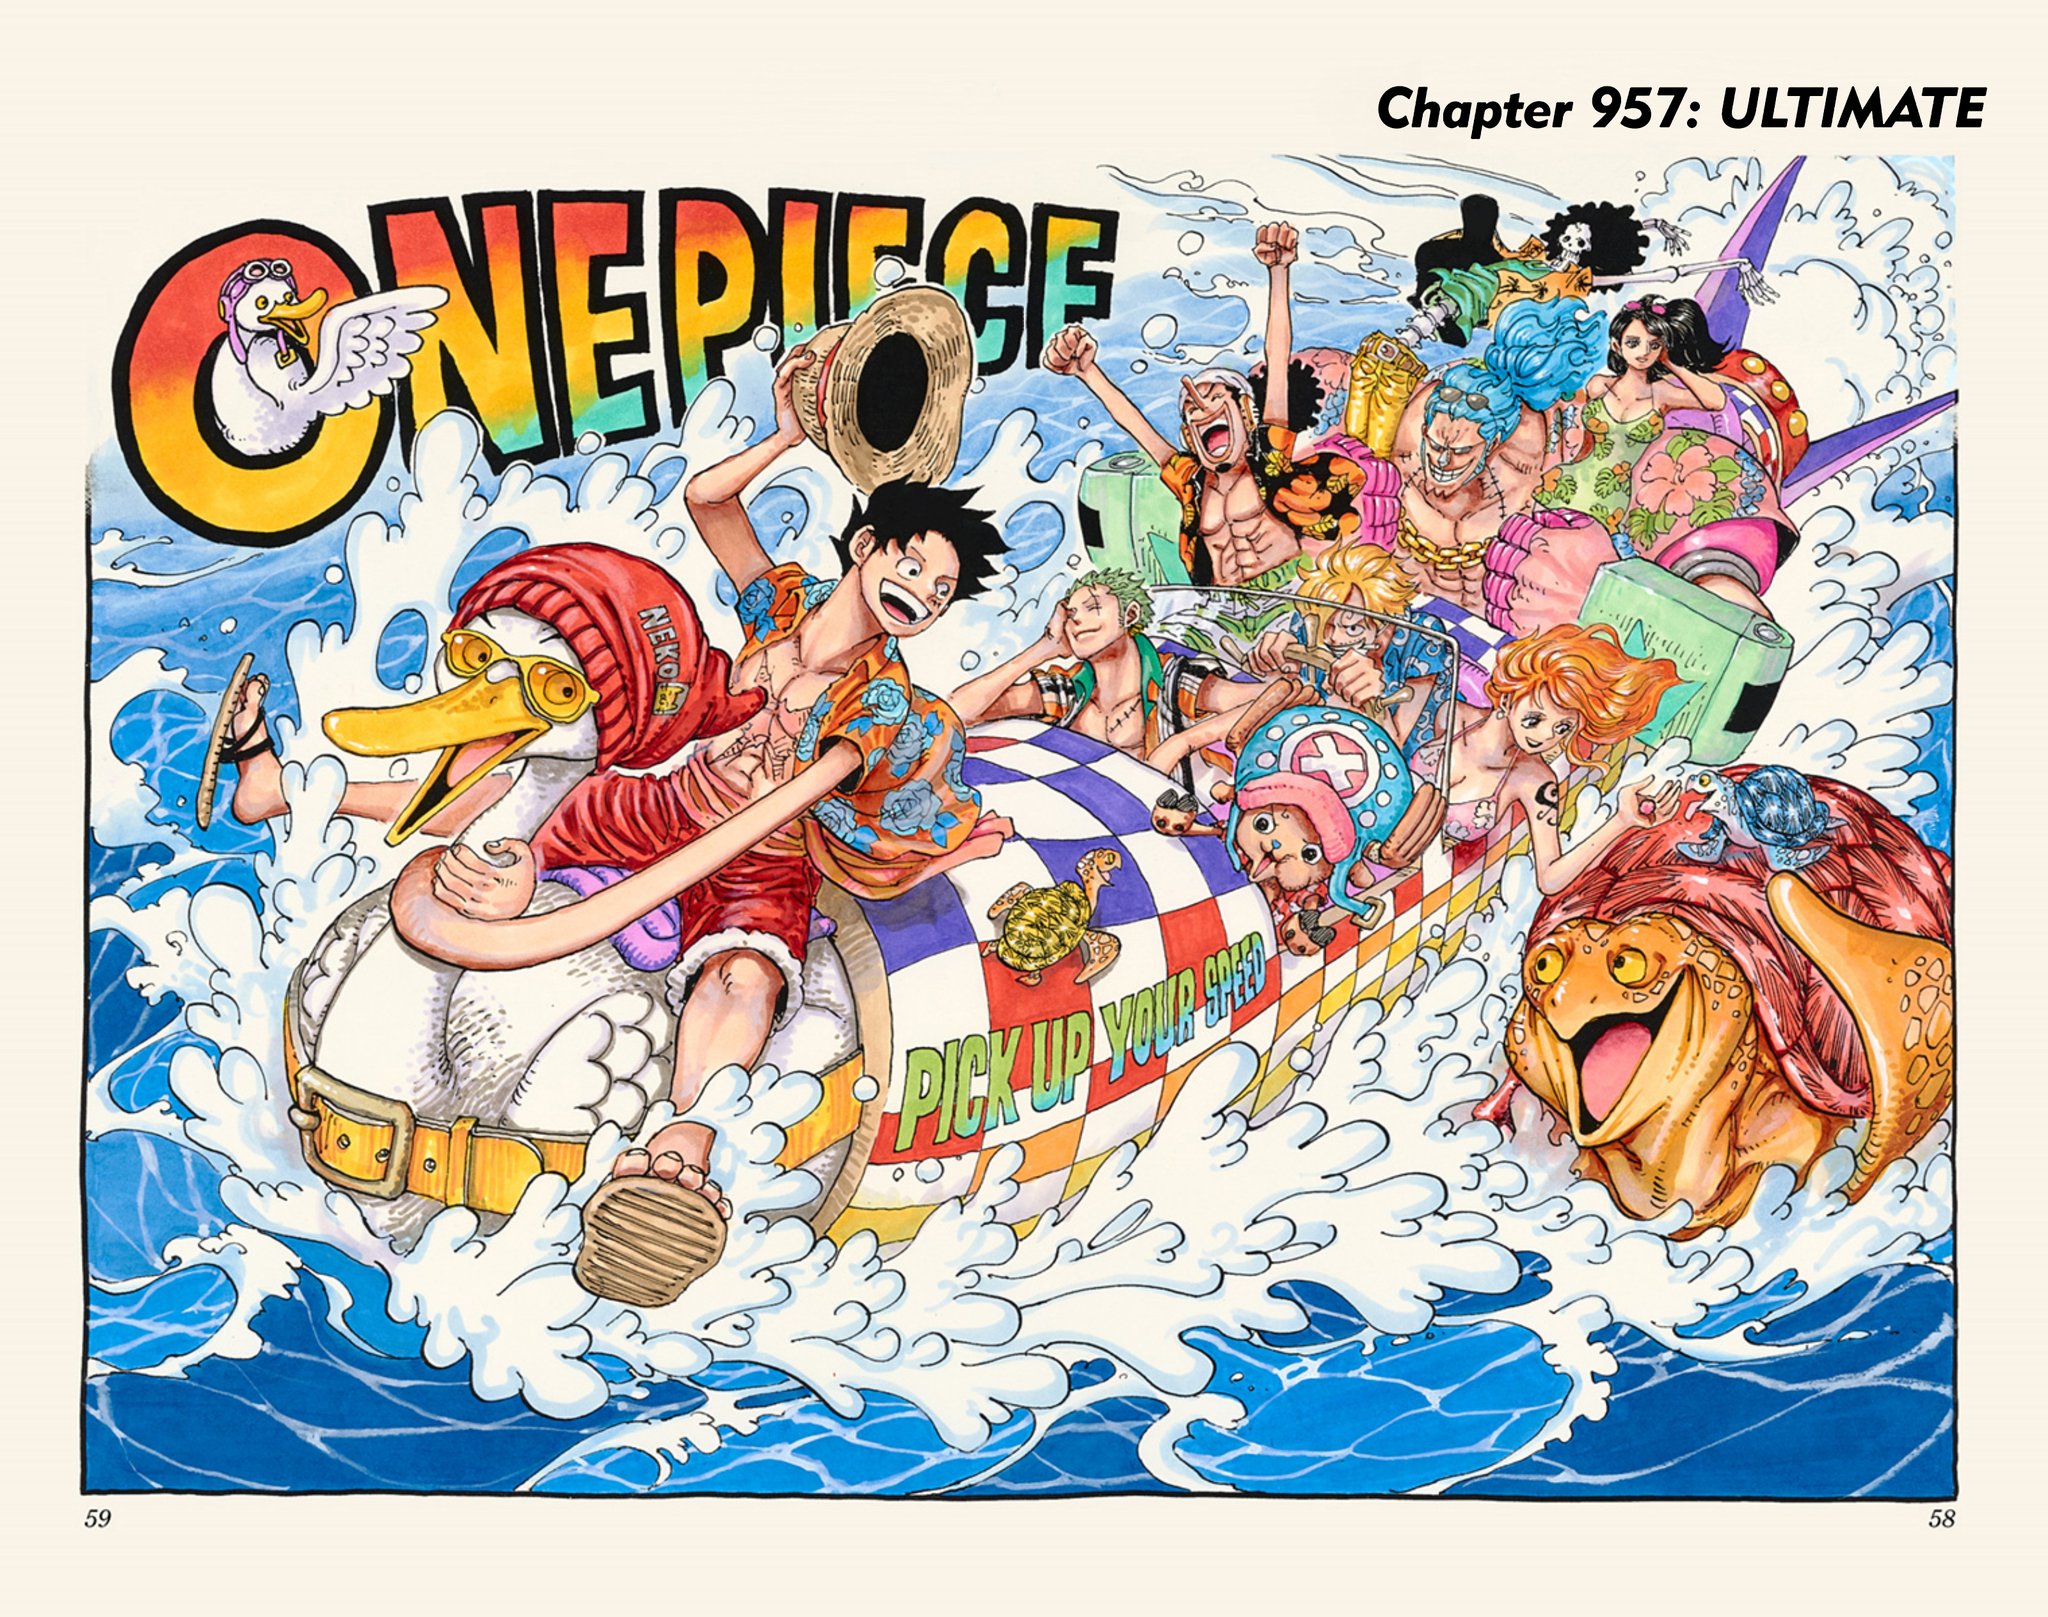 Darkphoenix One Piece Chapter 957 Digitally Colored In English Onepiece Onepiececoloring Chapter957 Colormanga Full Chapter Link T Co Den2n7qxlu T Co Gy9difwqvh Twitter